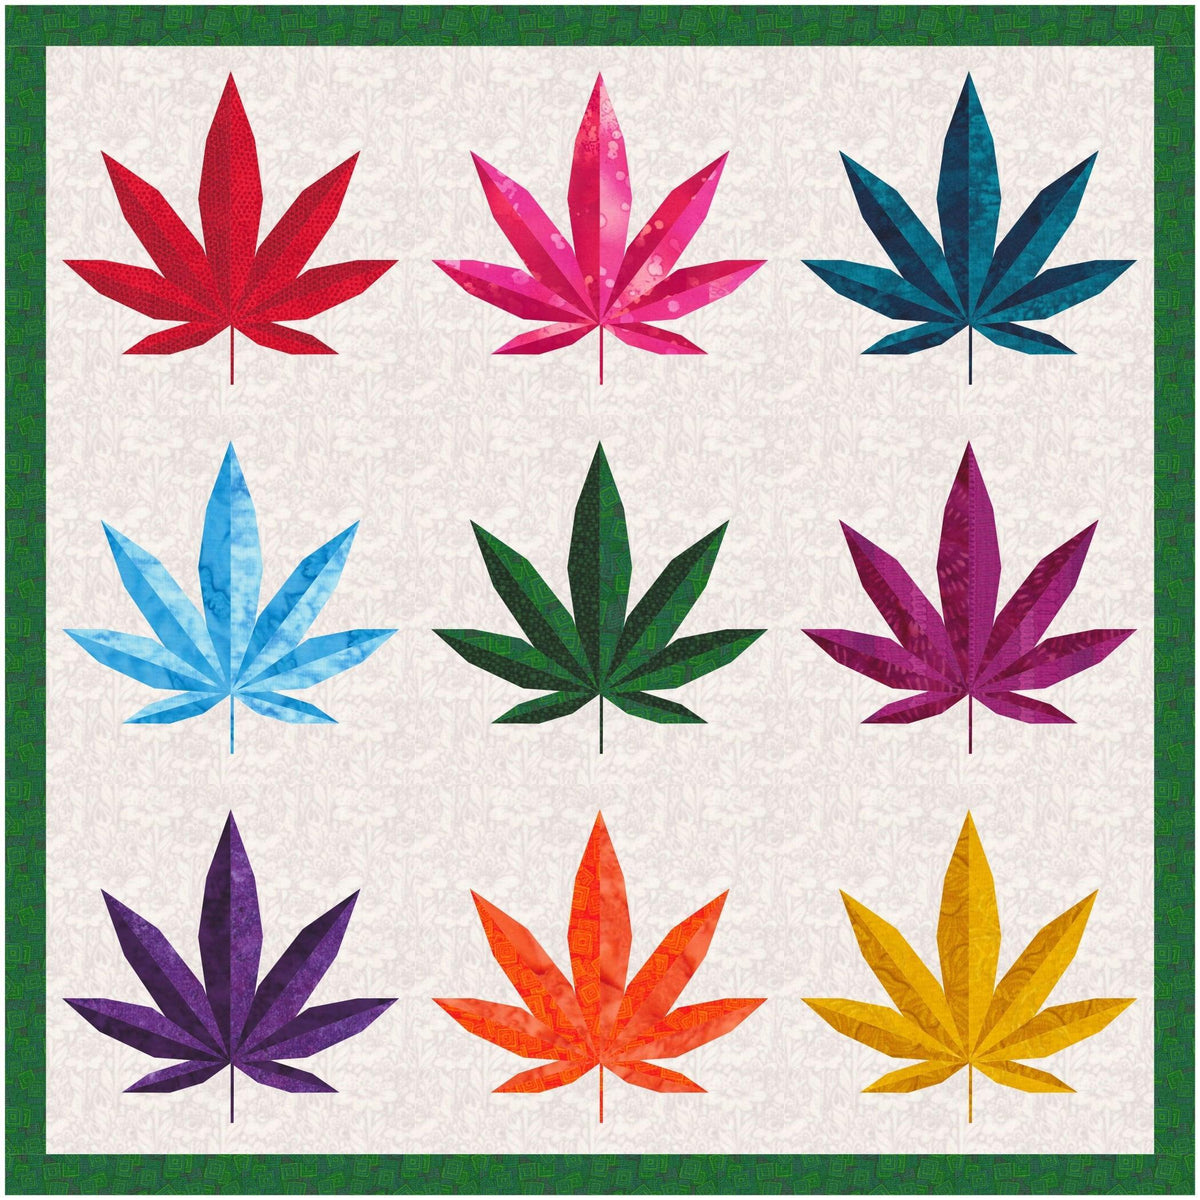 Single Cannabis Marijuana Leaf Weed Green Black Duvet Cover Quilt